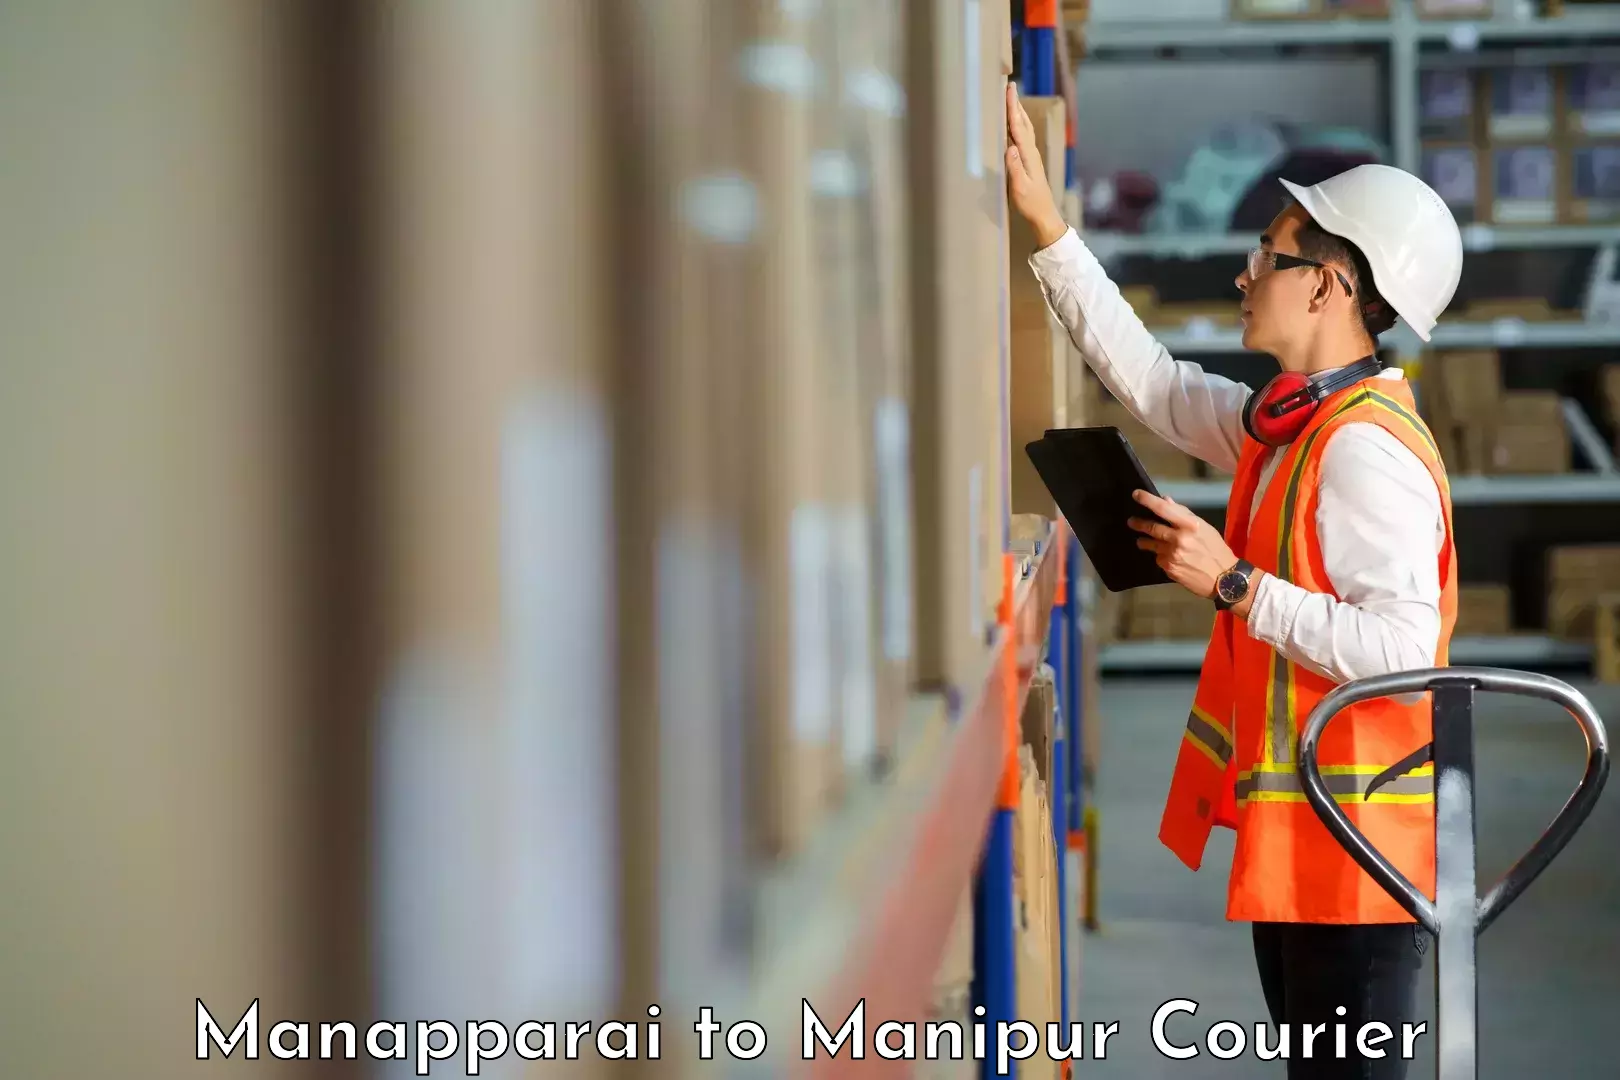 Reliable logistics providers Manapparai to Kanti